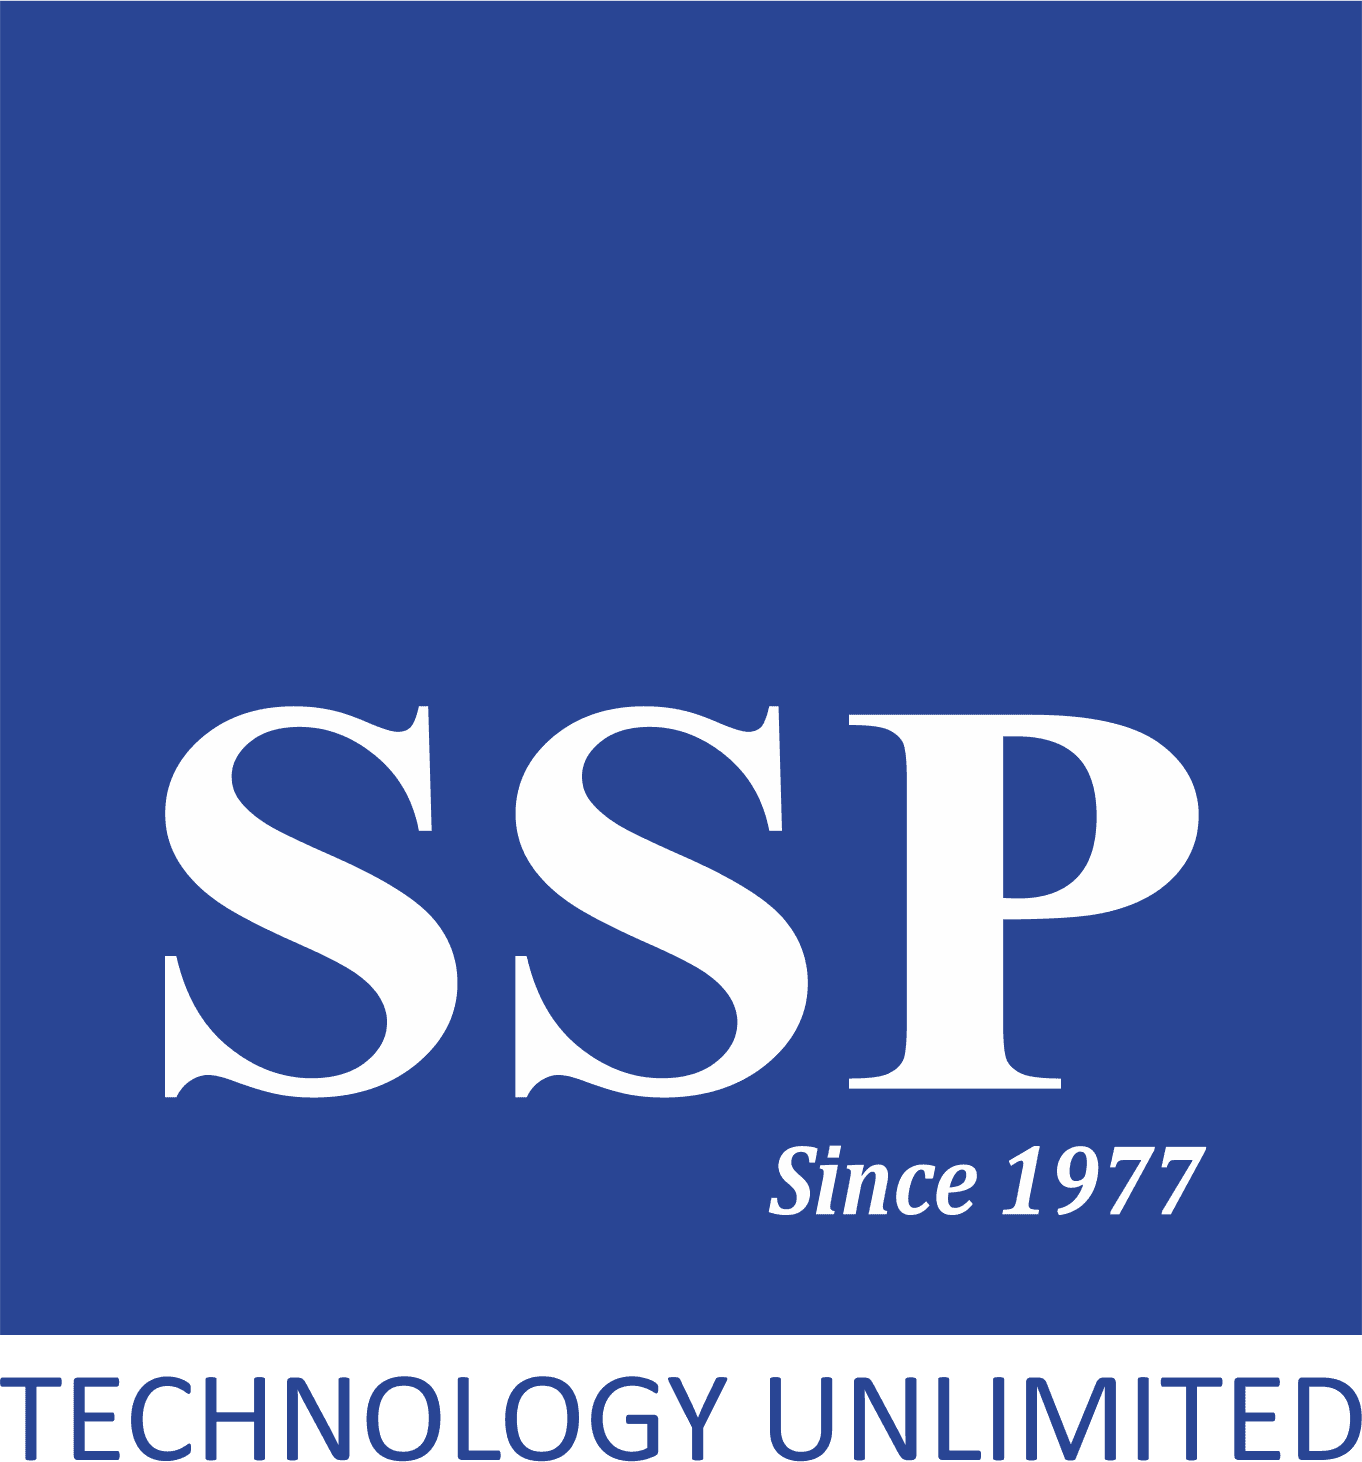 SSP PVT. LTD